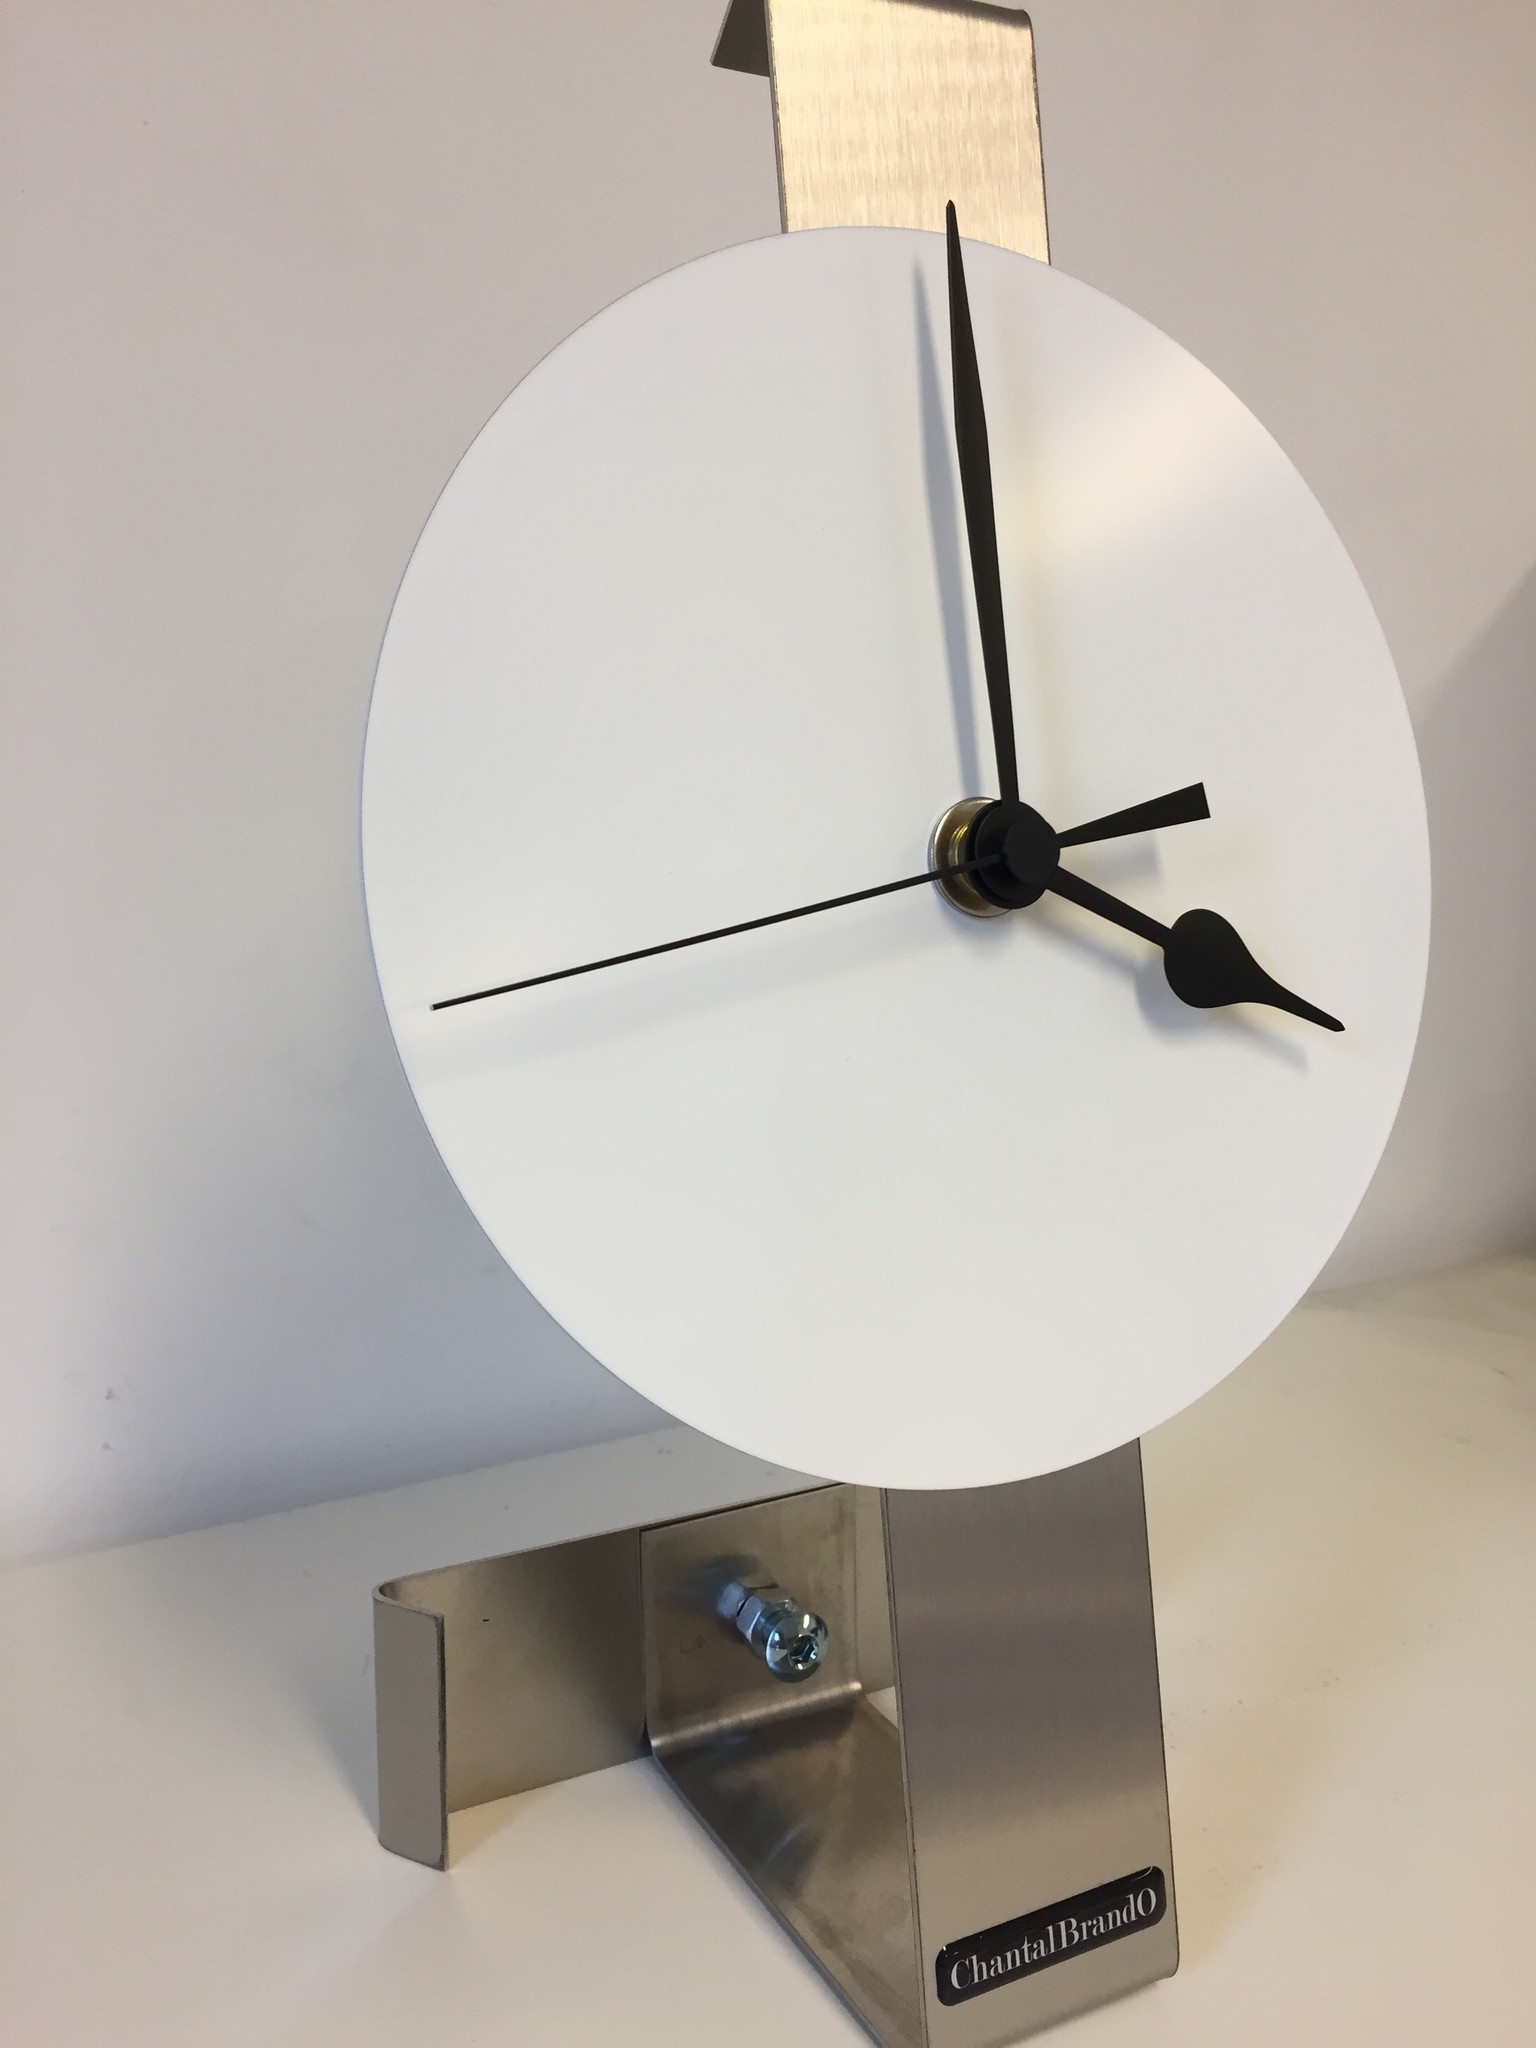 ChantalBrandO Design - Table clock White Spirit Modern Dutch Design